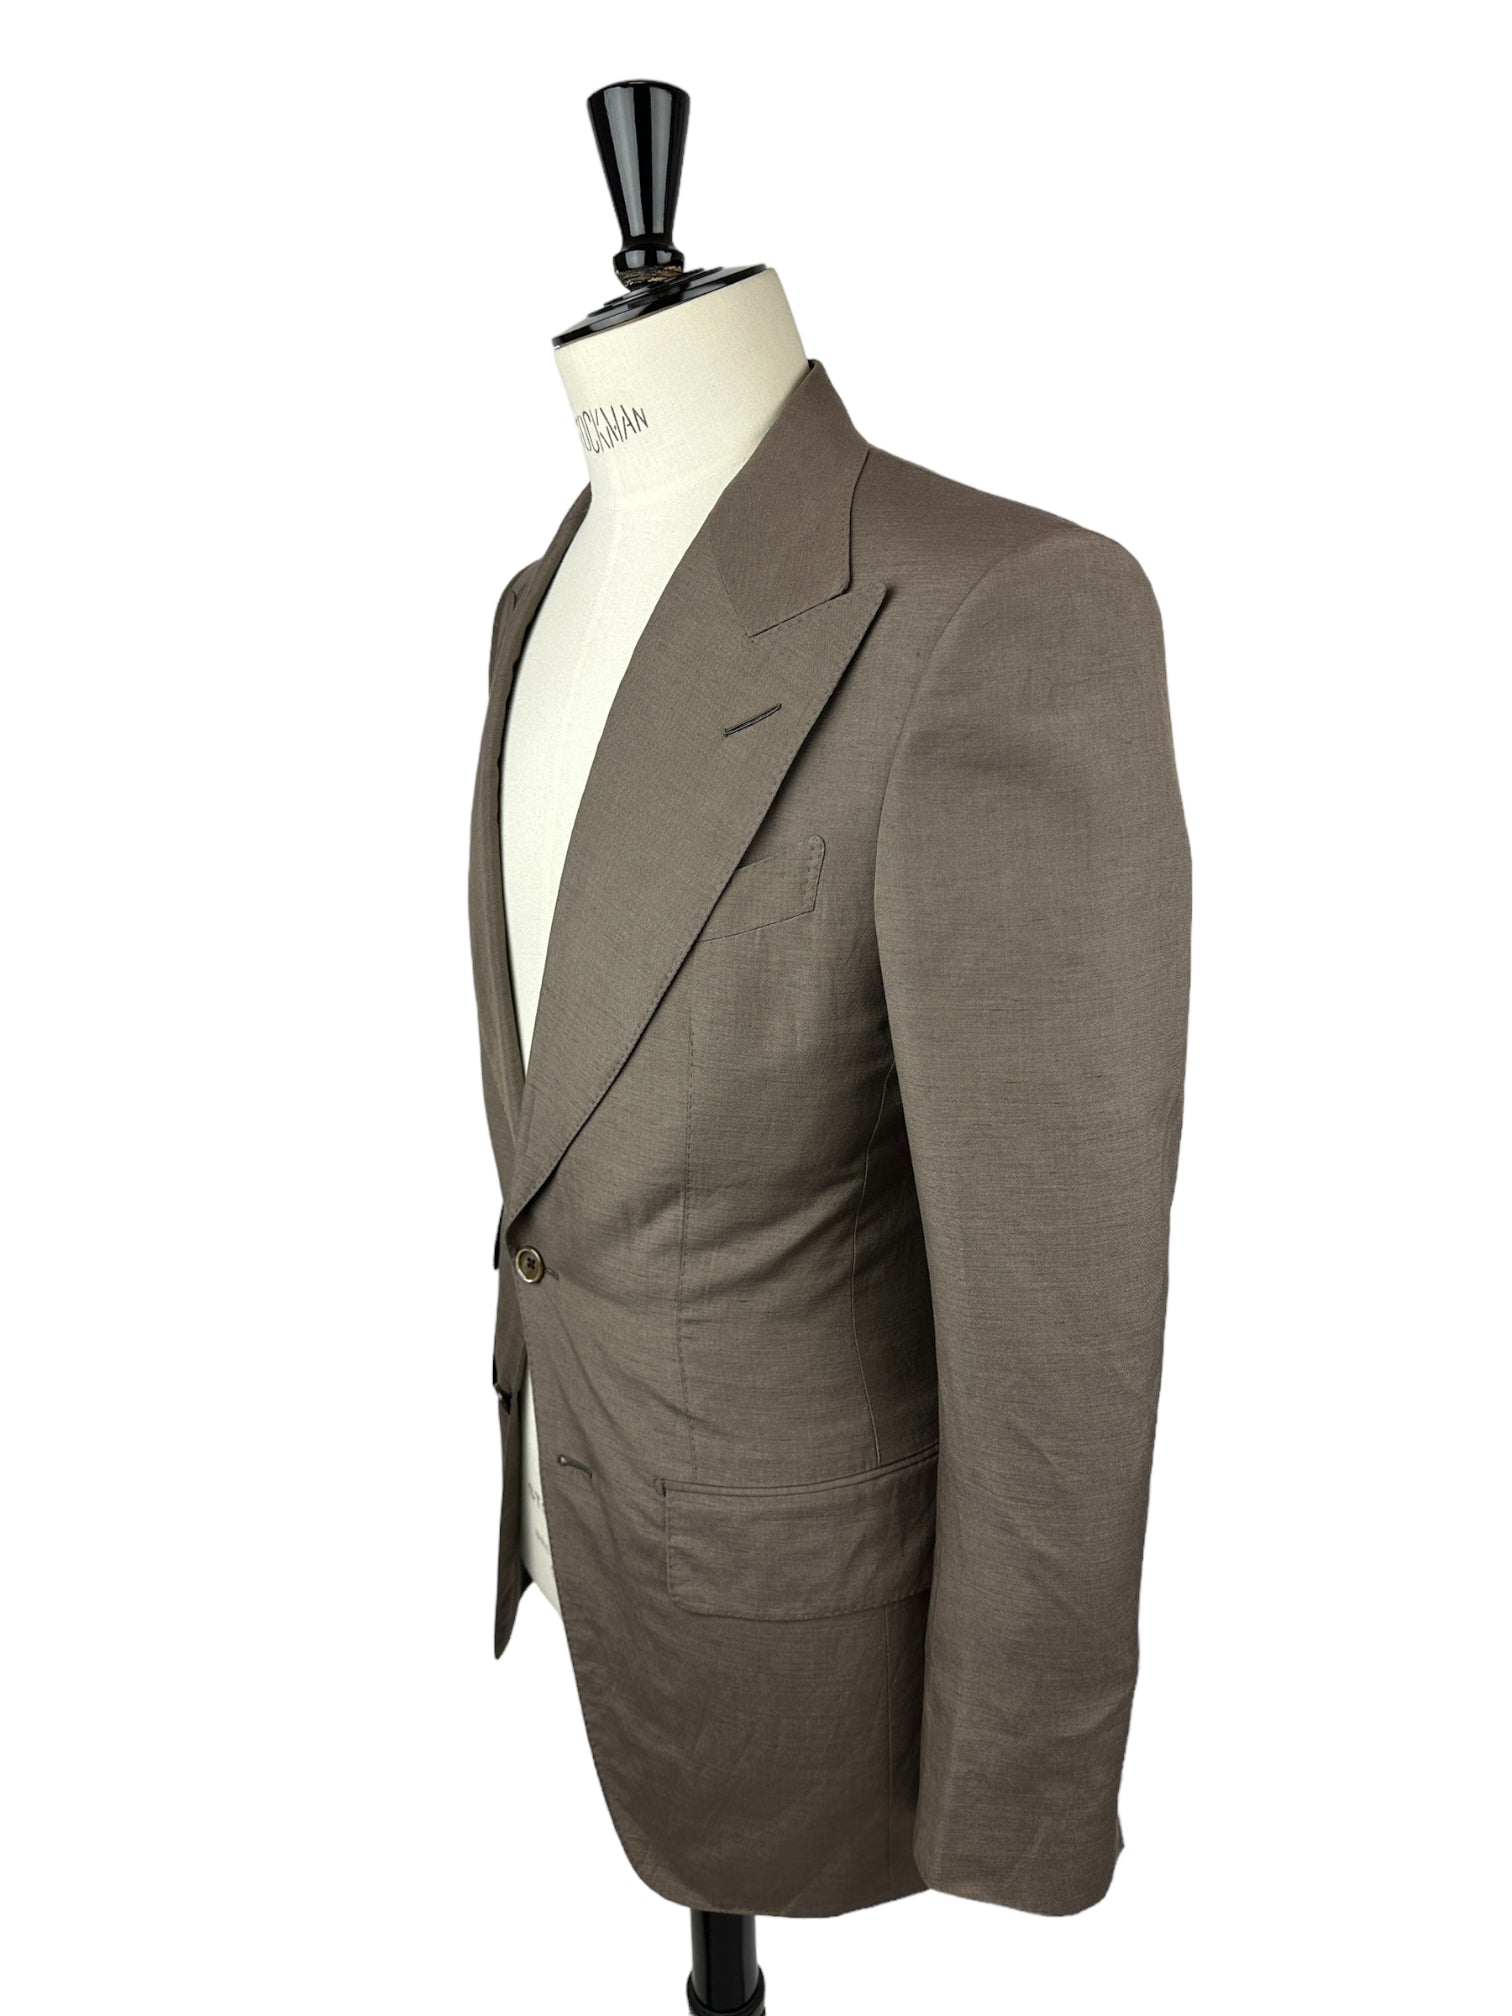 Tom Ford Atticus Taupe Silk & Linen Suit